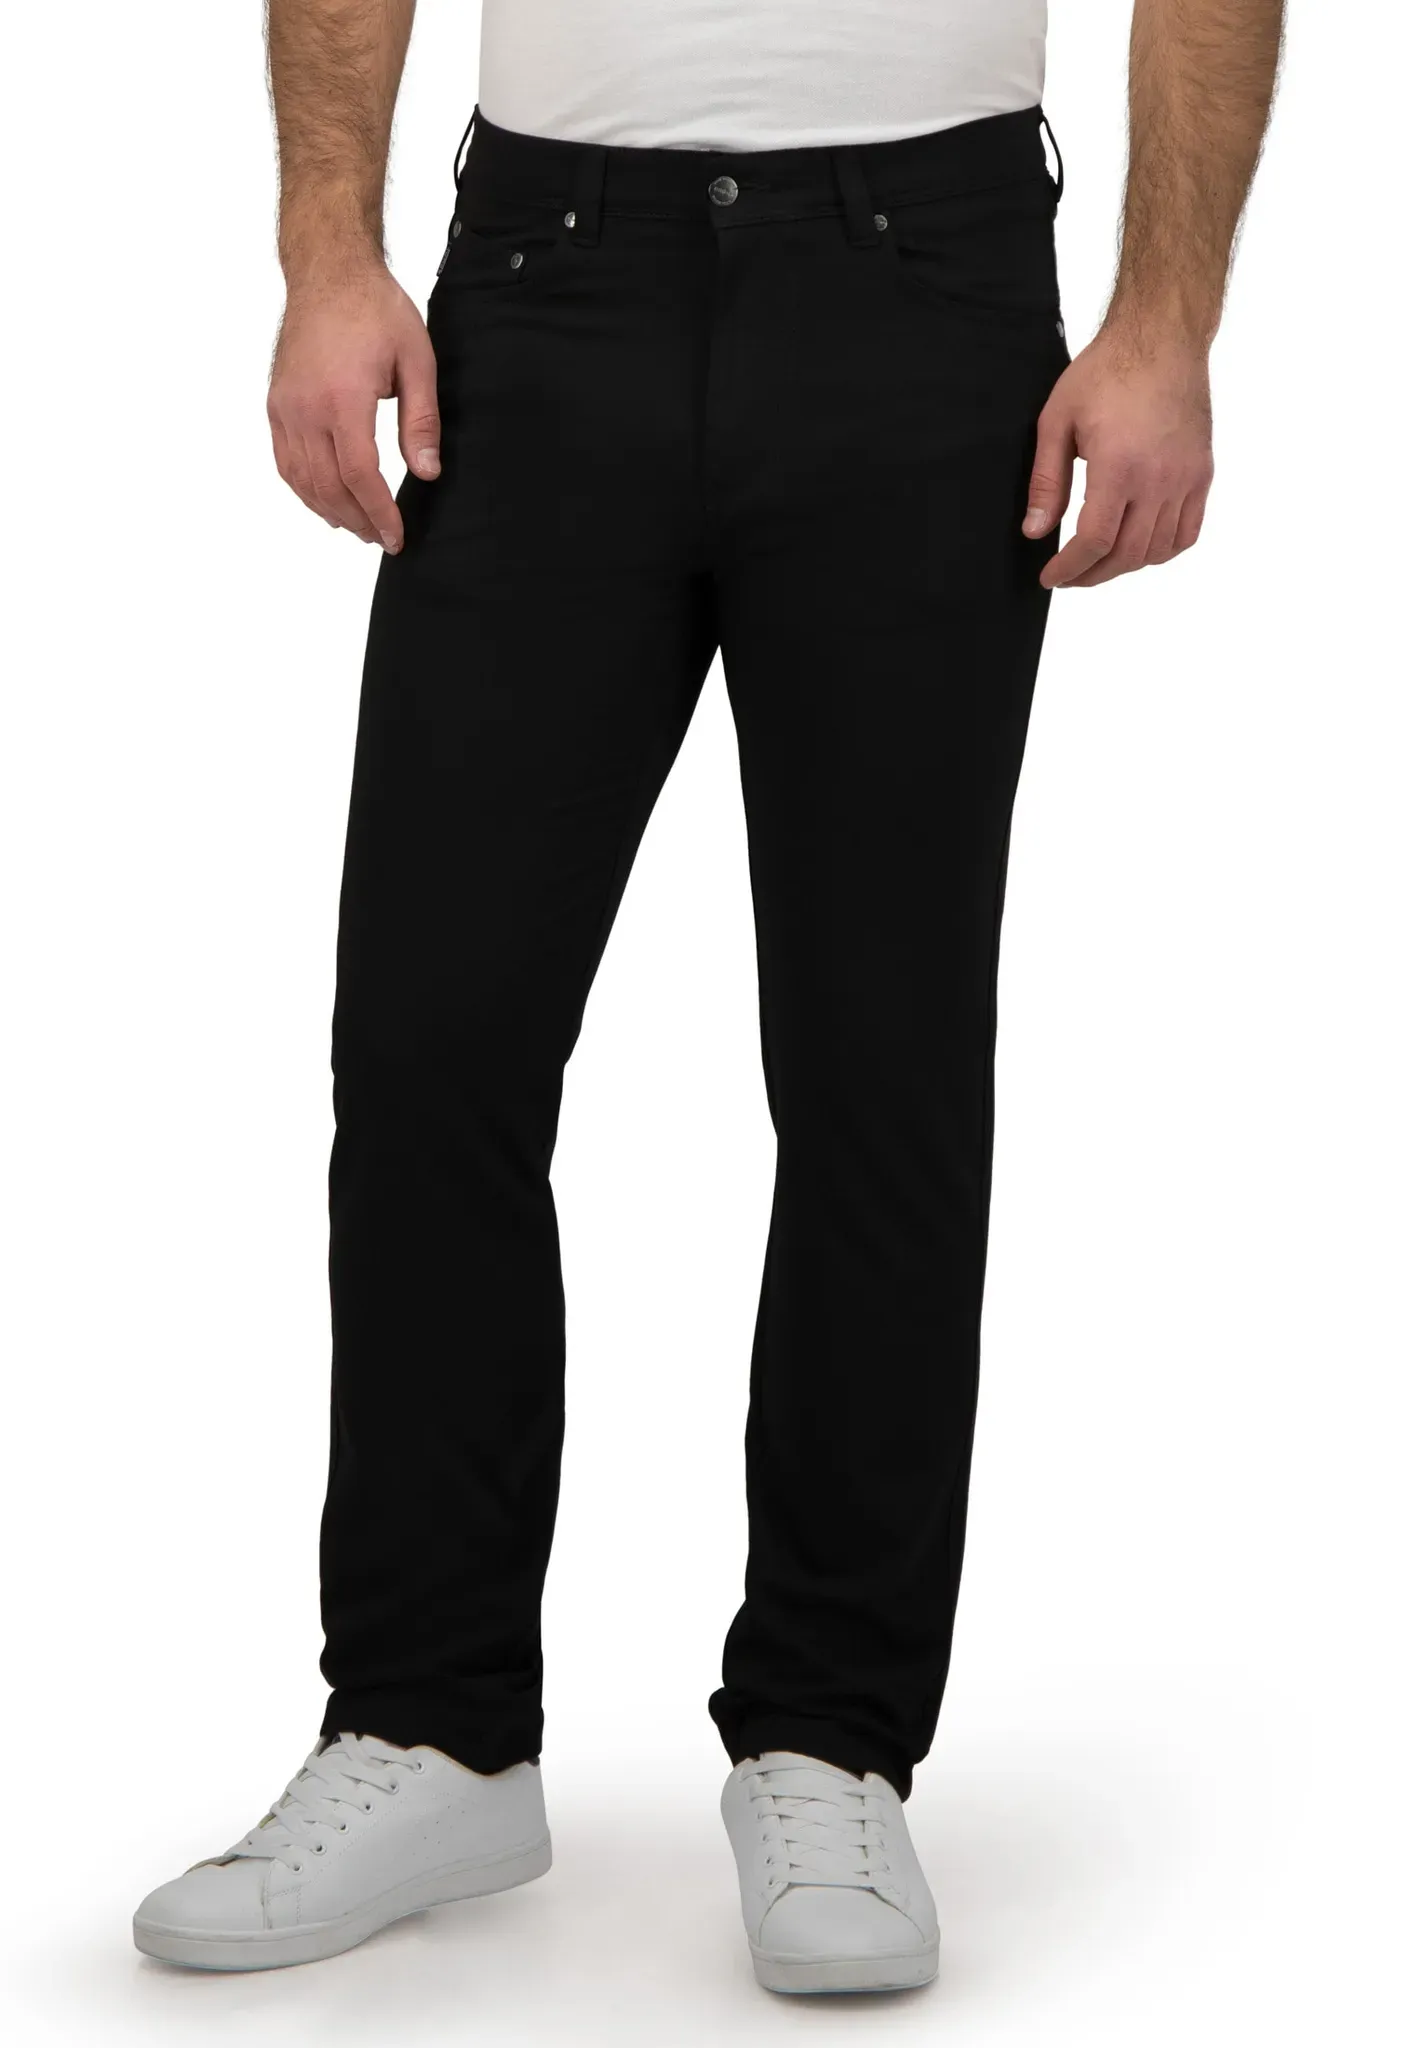 Bequeme Jeans BRÜHL "Genua III 1" Gr. 35, EURO-Größen, schwarz Herren Jeans 5-Pocket-Jeans Straight-fit-Jeans Stretchjeans Stretch